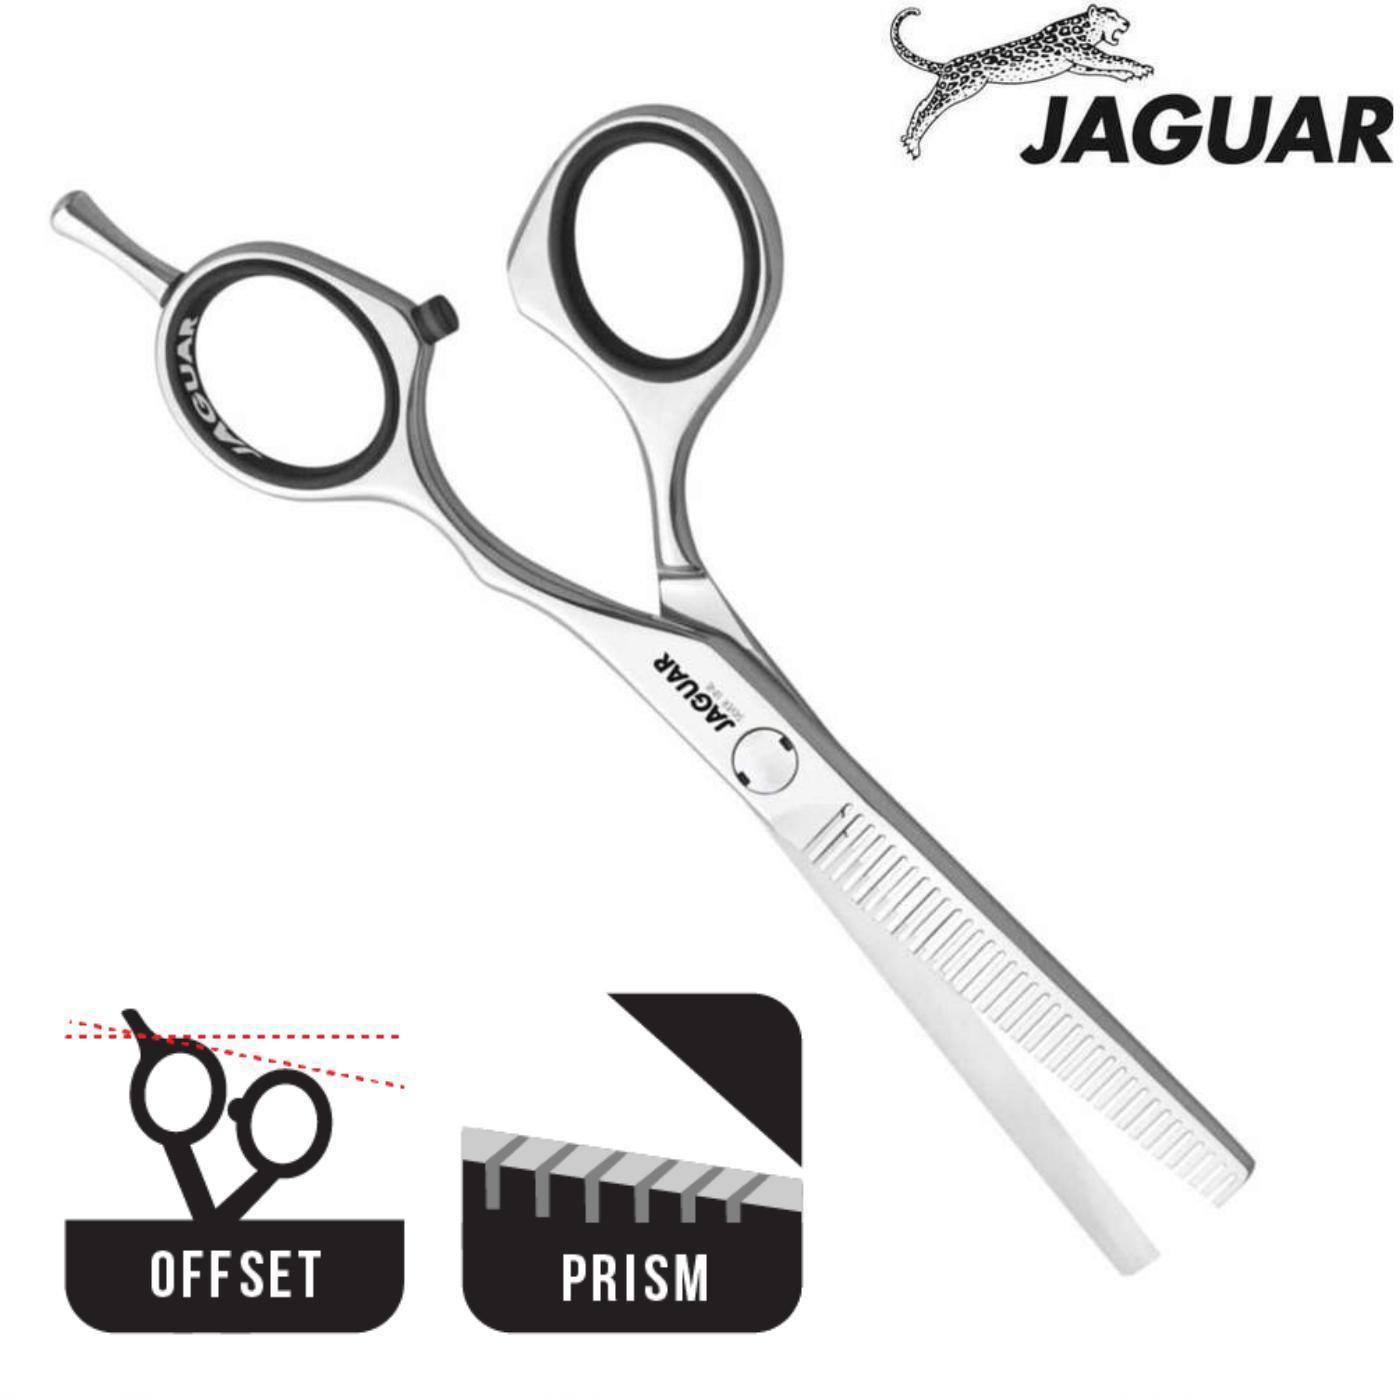 Jaguar Silver Line CM36 Hair Thinning Scissors - Japan Scissors